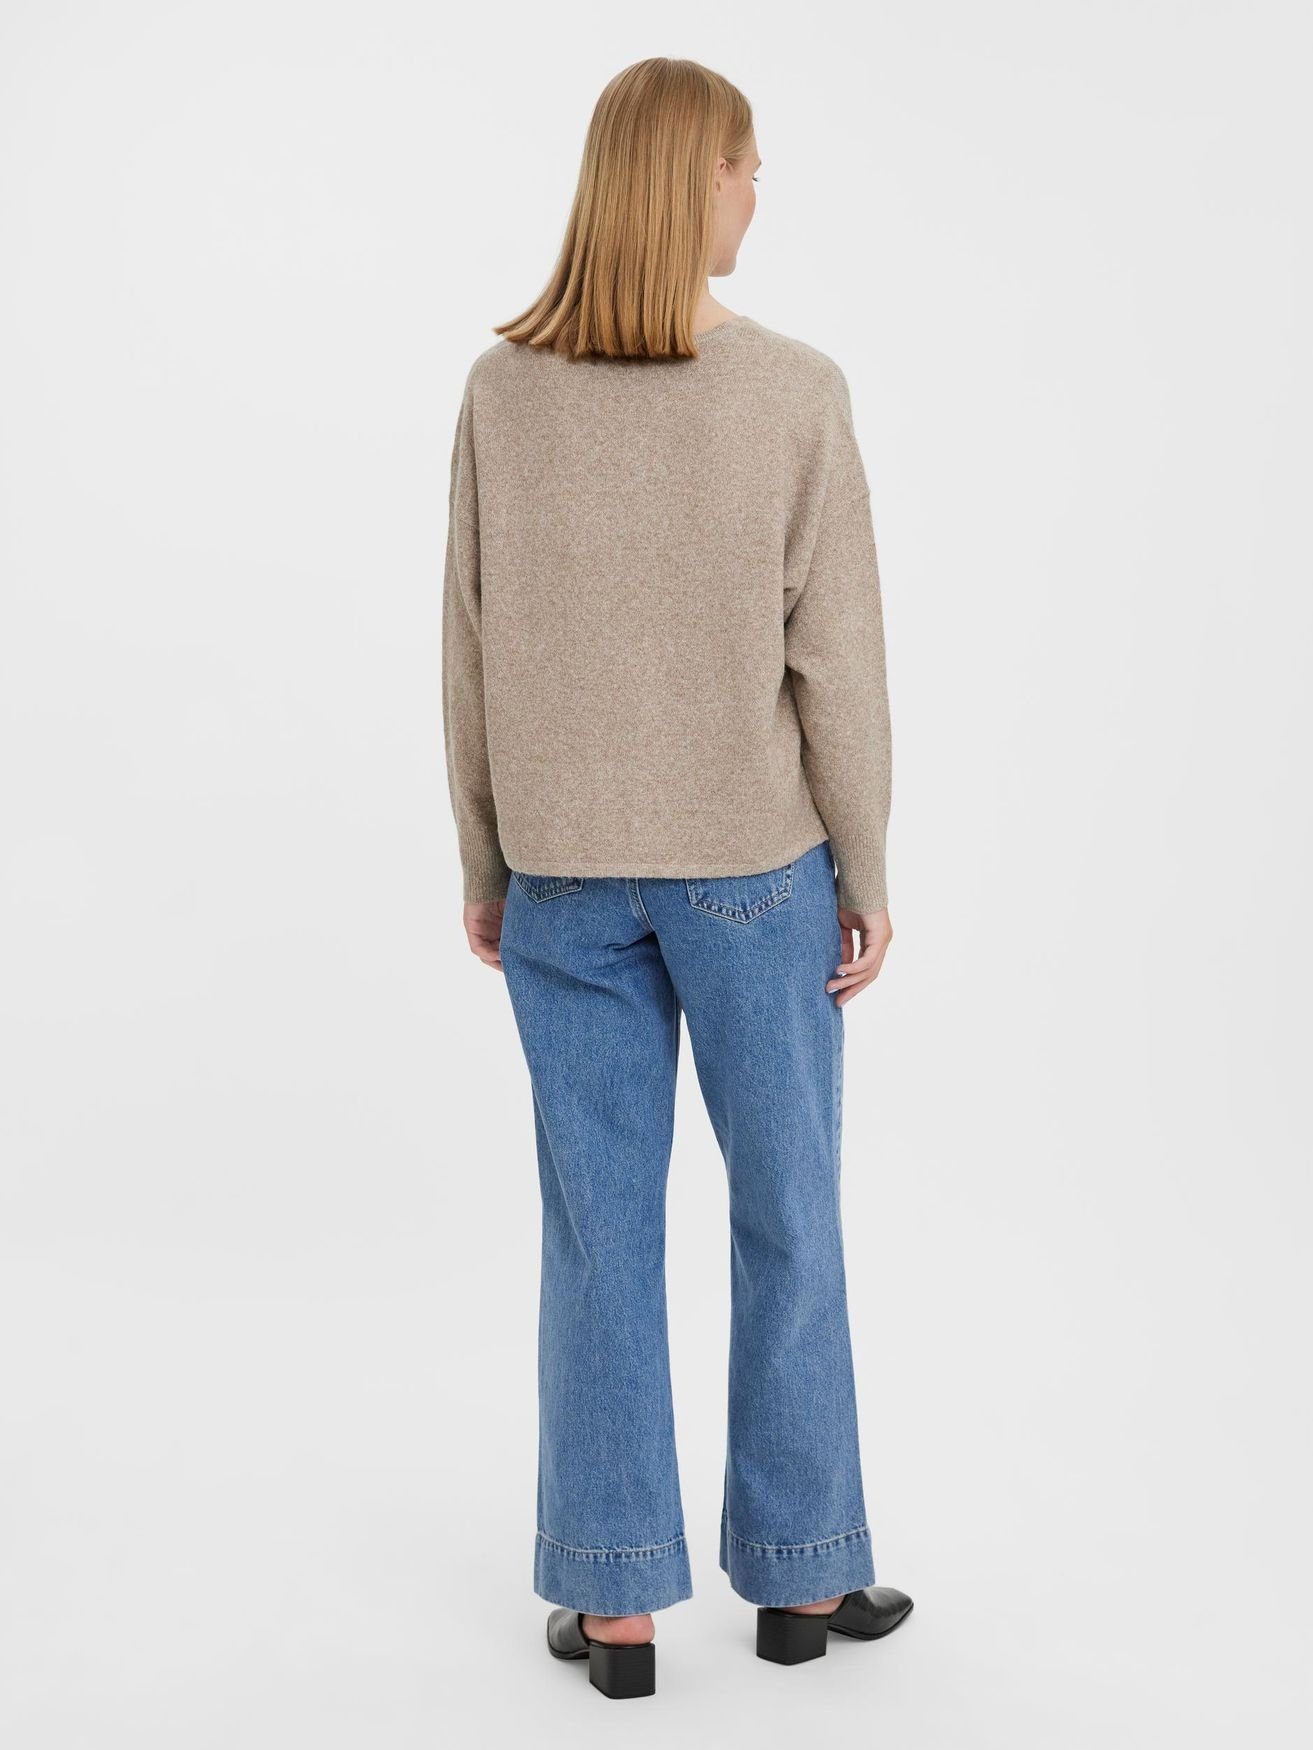 Strickpullover Braun 4852 Feinstrick in Vero Moda Sweater Langarm VMDOFFY Pullover V-Ausschnitt